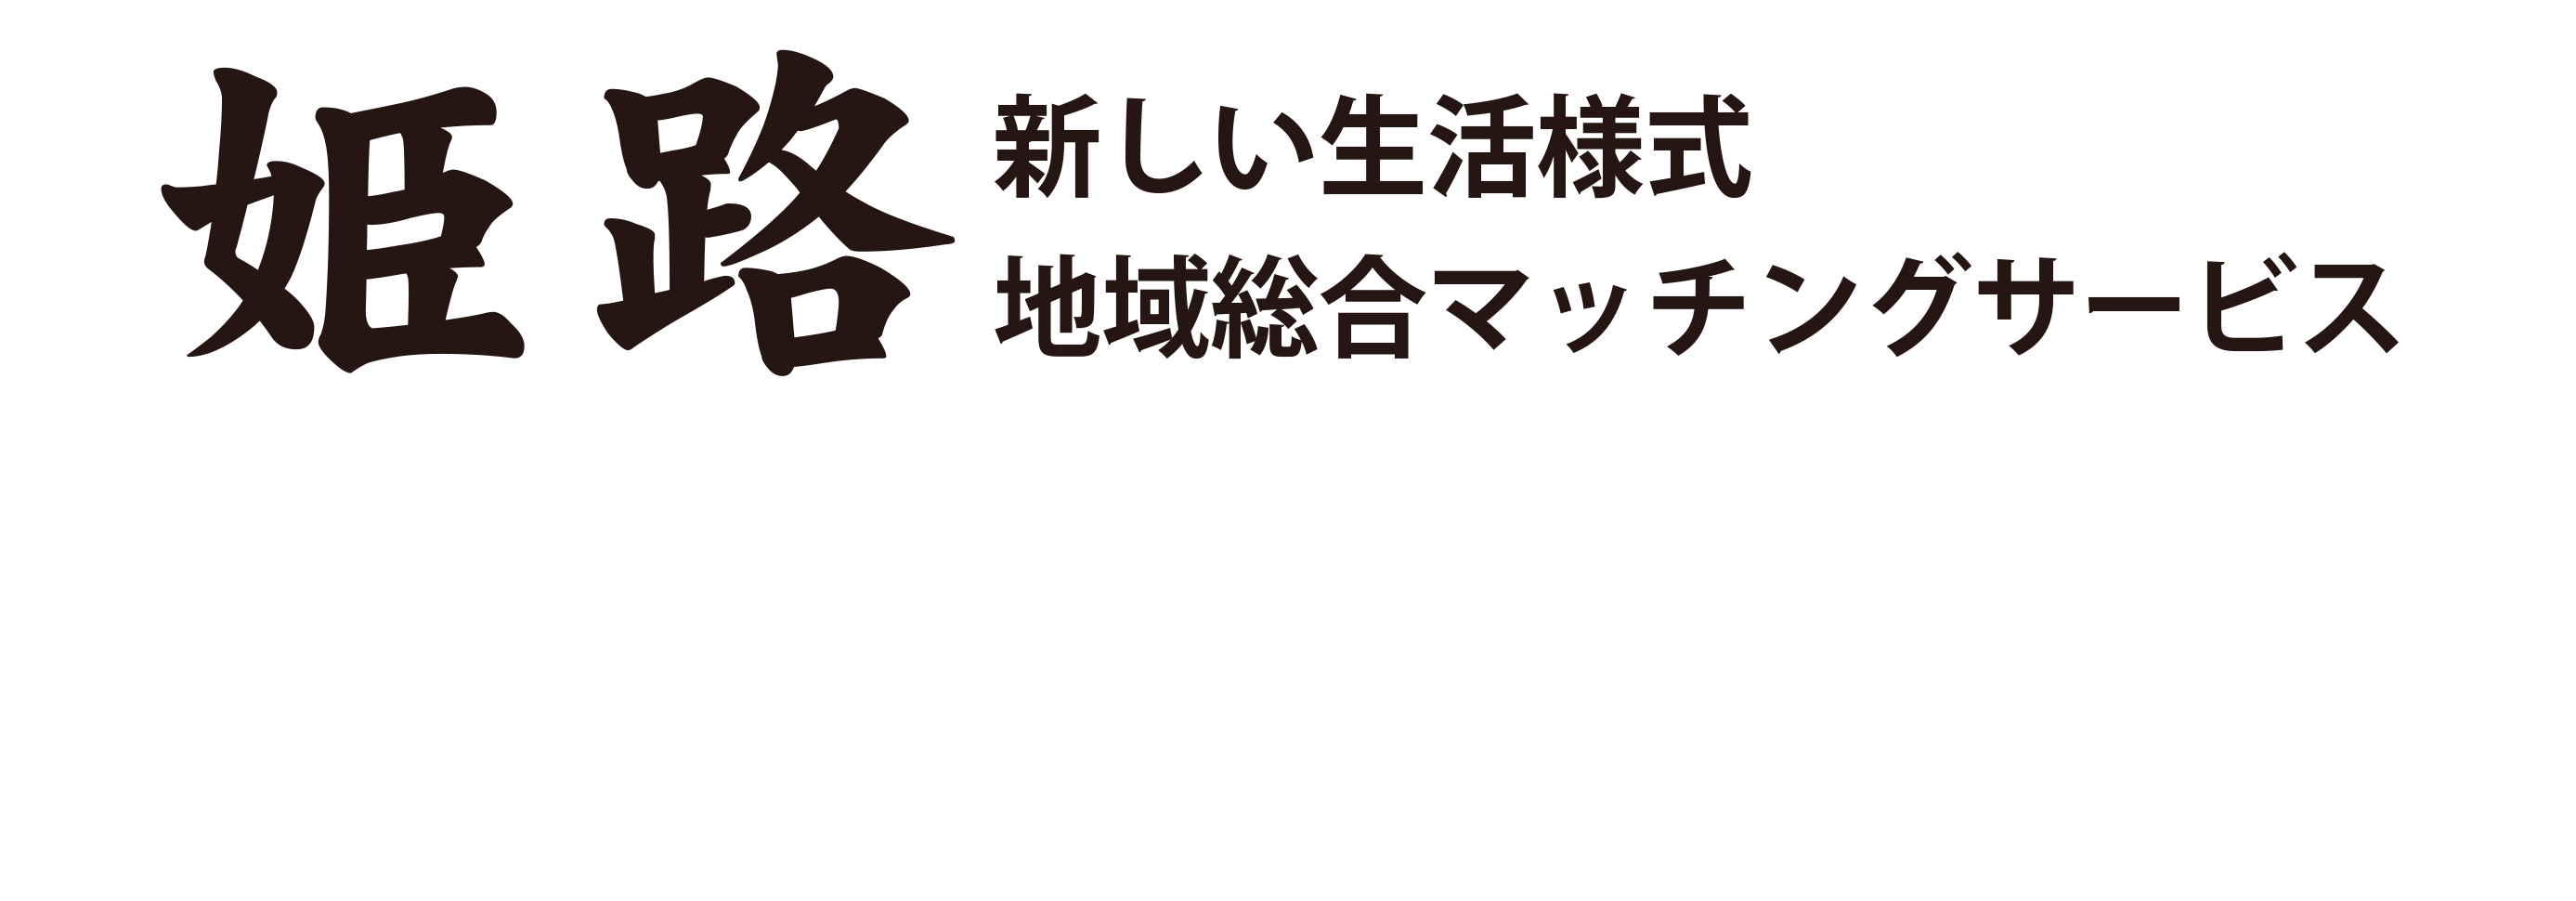 Himeji Mirai Town .com 【ミライタウン.com】